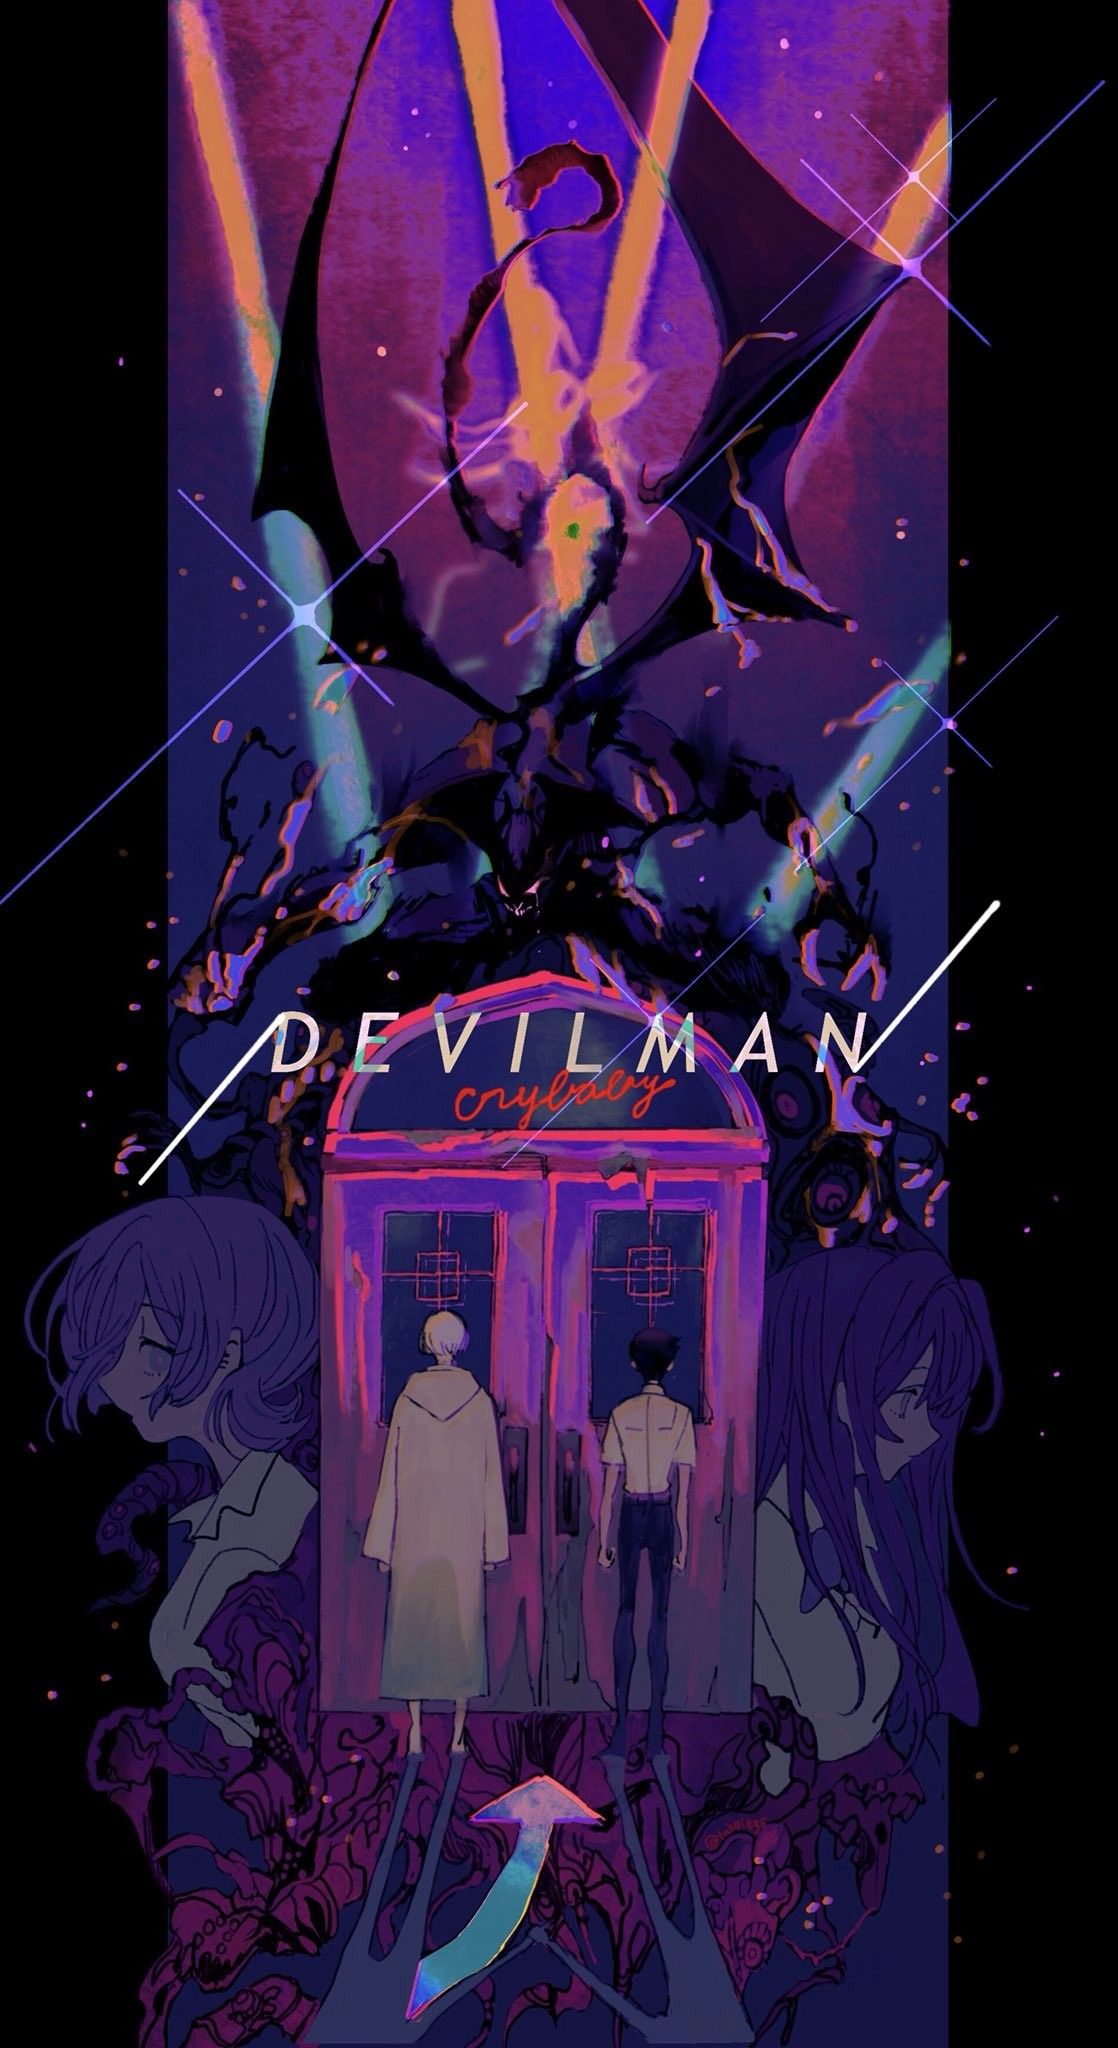 Devilman: Crybaby Wallpapers